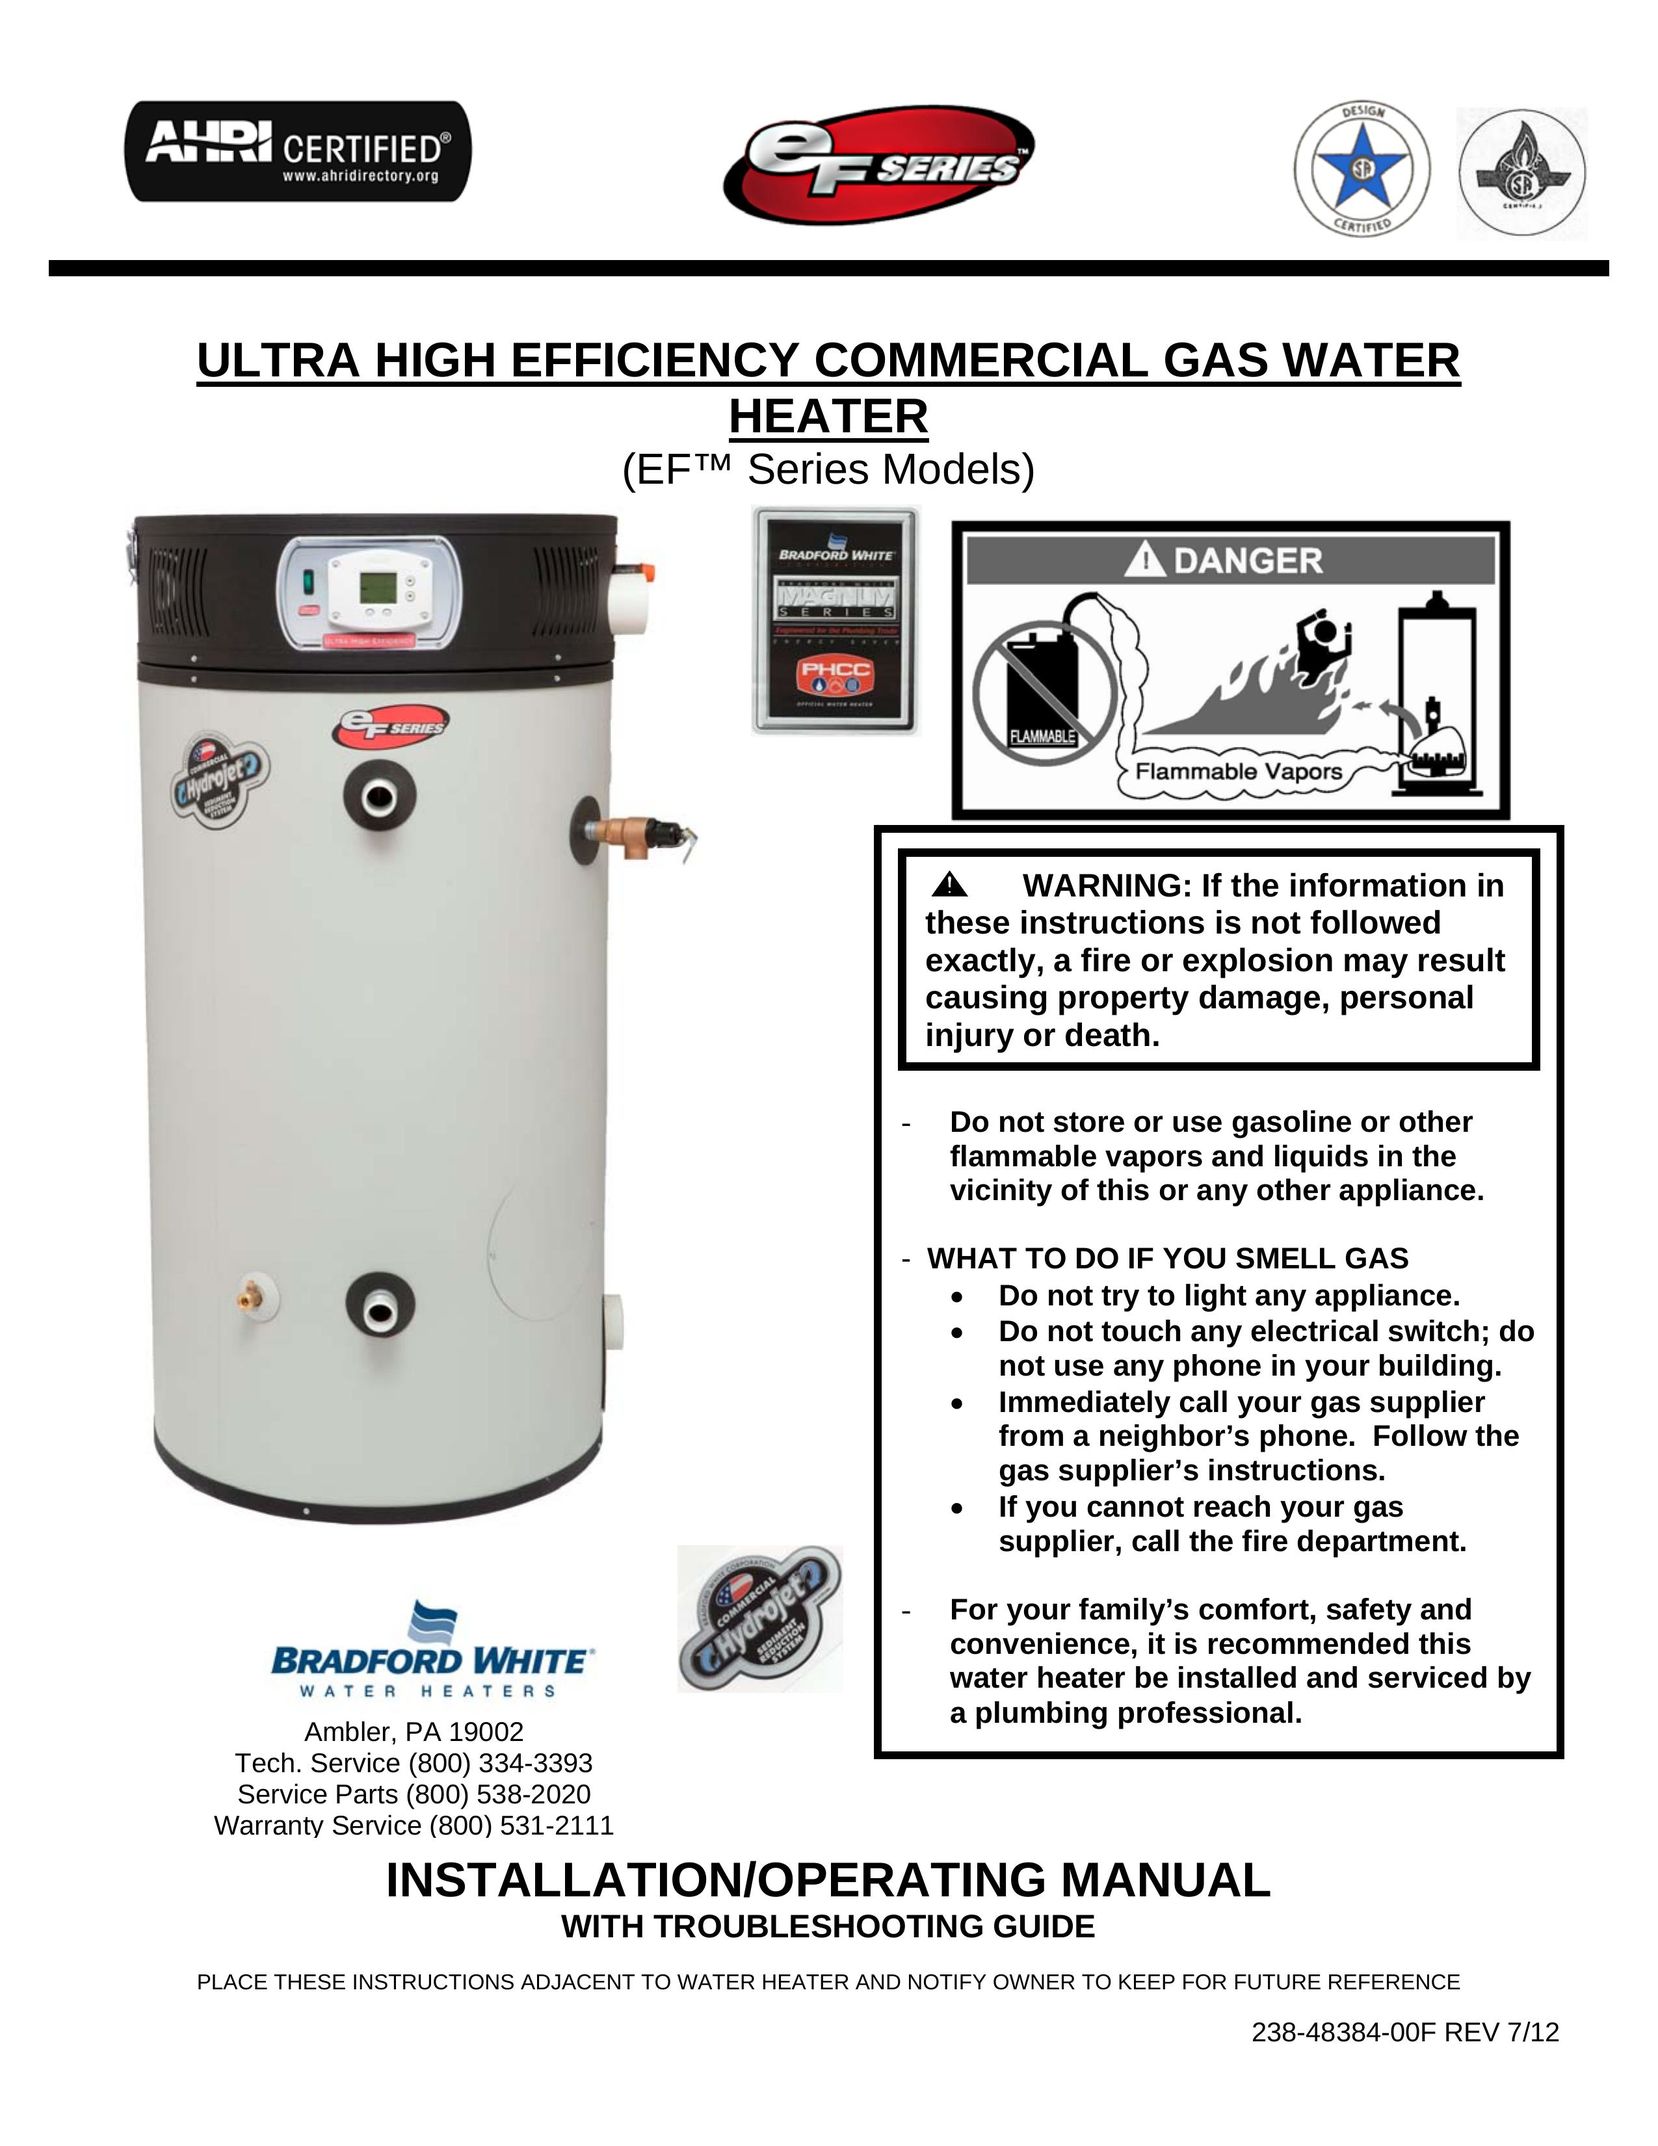 Bradford-White Corp 238-48384-00F Water Heater User Manual